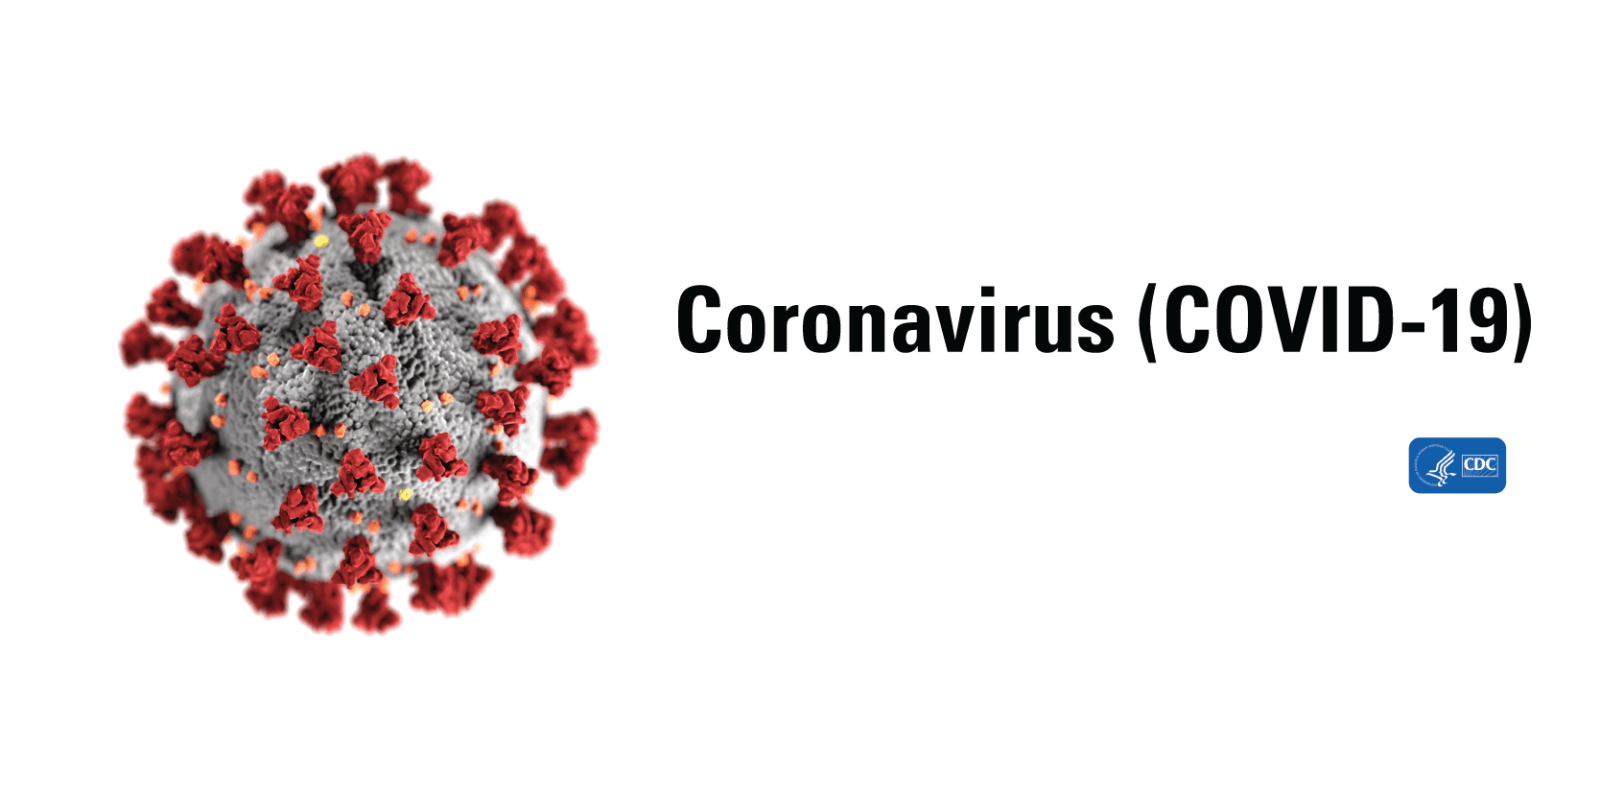 enlarged image of COVID-19 virus